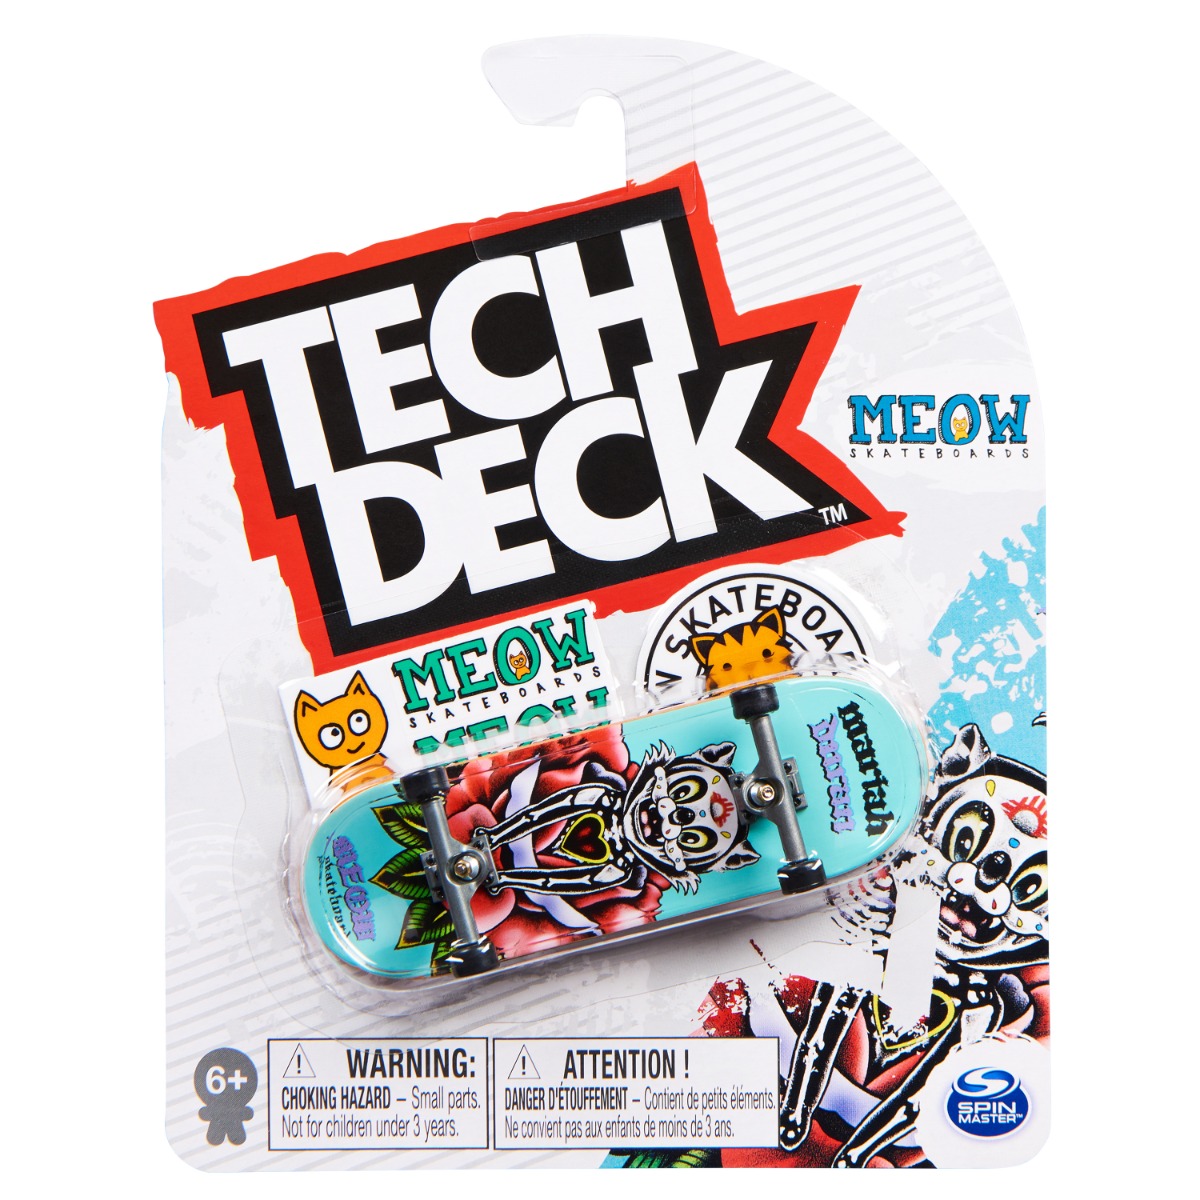 Mini placa skateboard Tech Deck, Meow Mariah Druan, 20141231